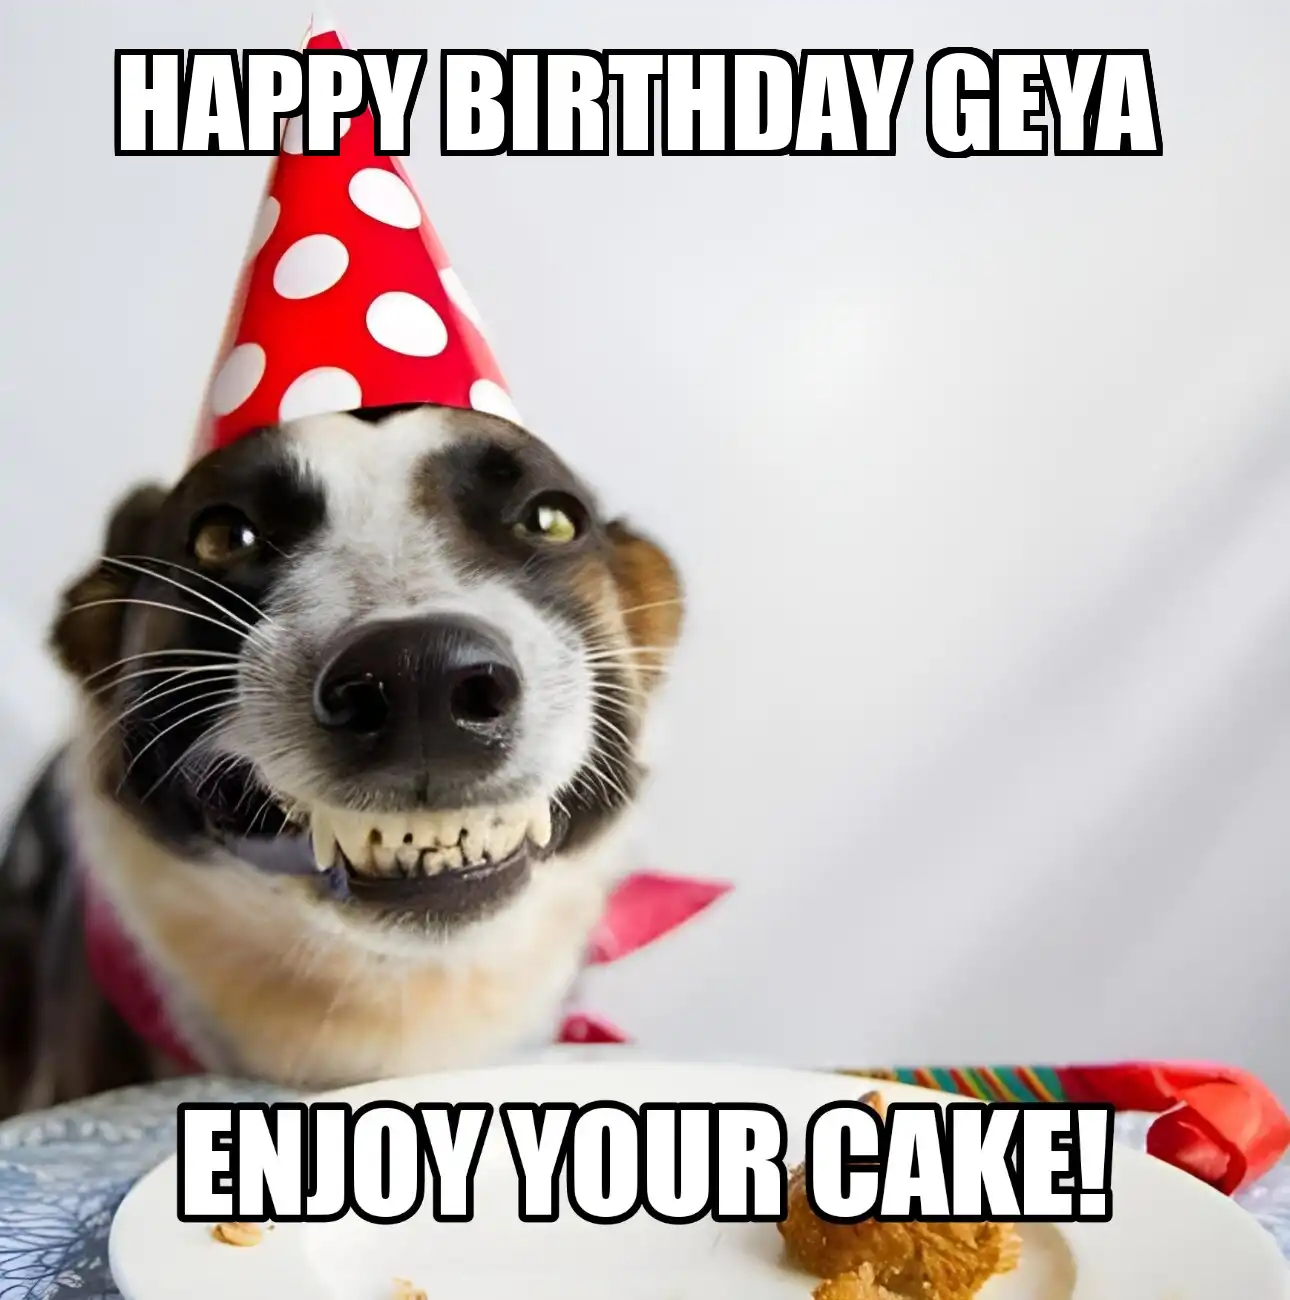 Happy Birthday Geya Enjoy Your Cake Dog Meme